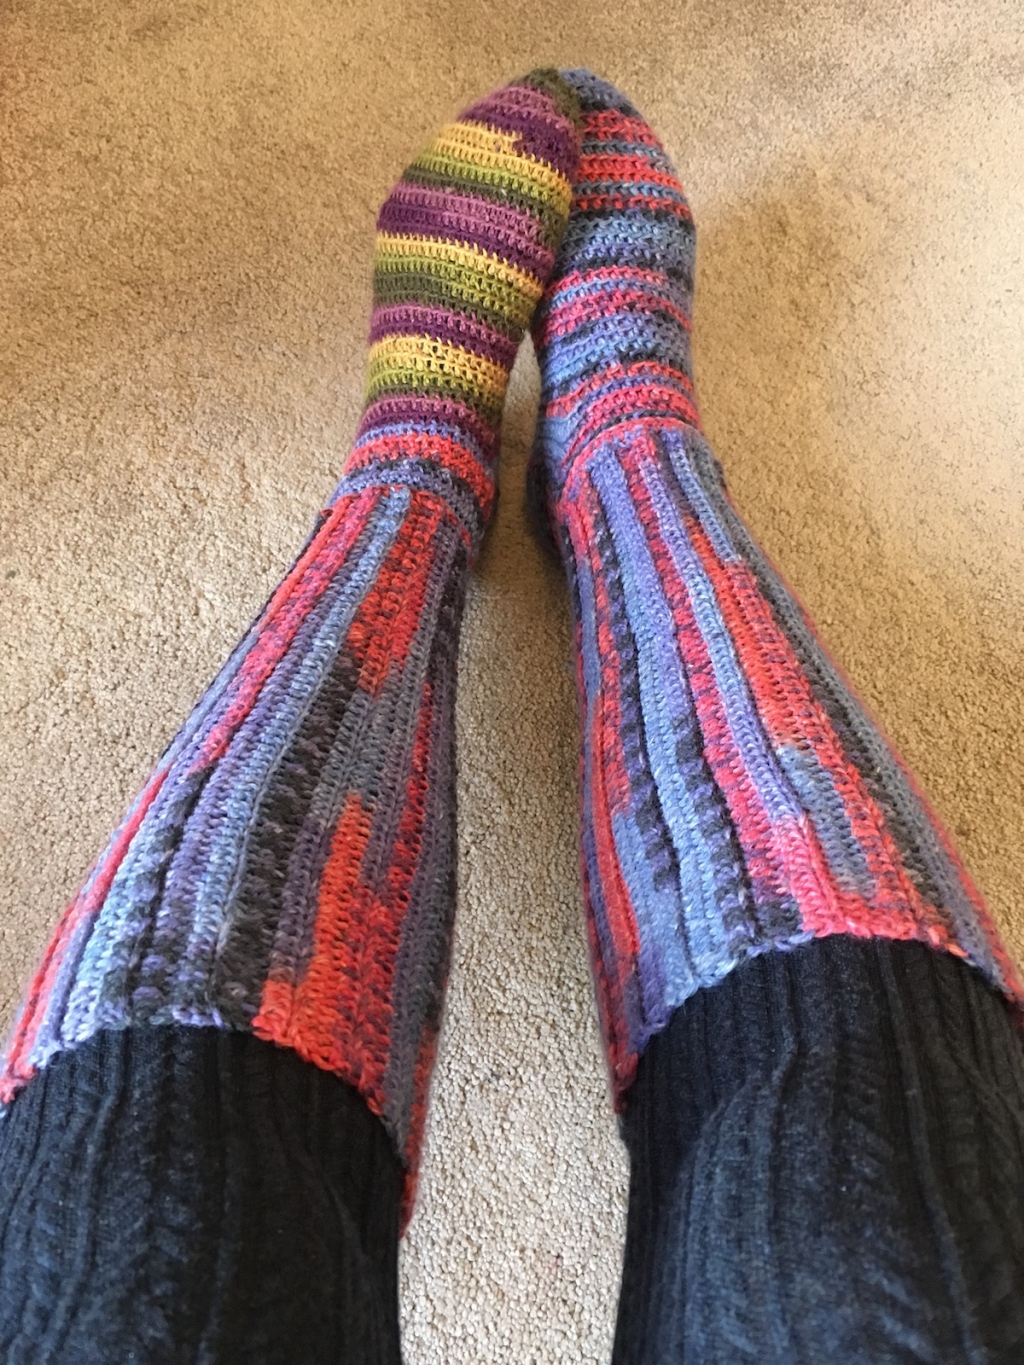 I made socks